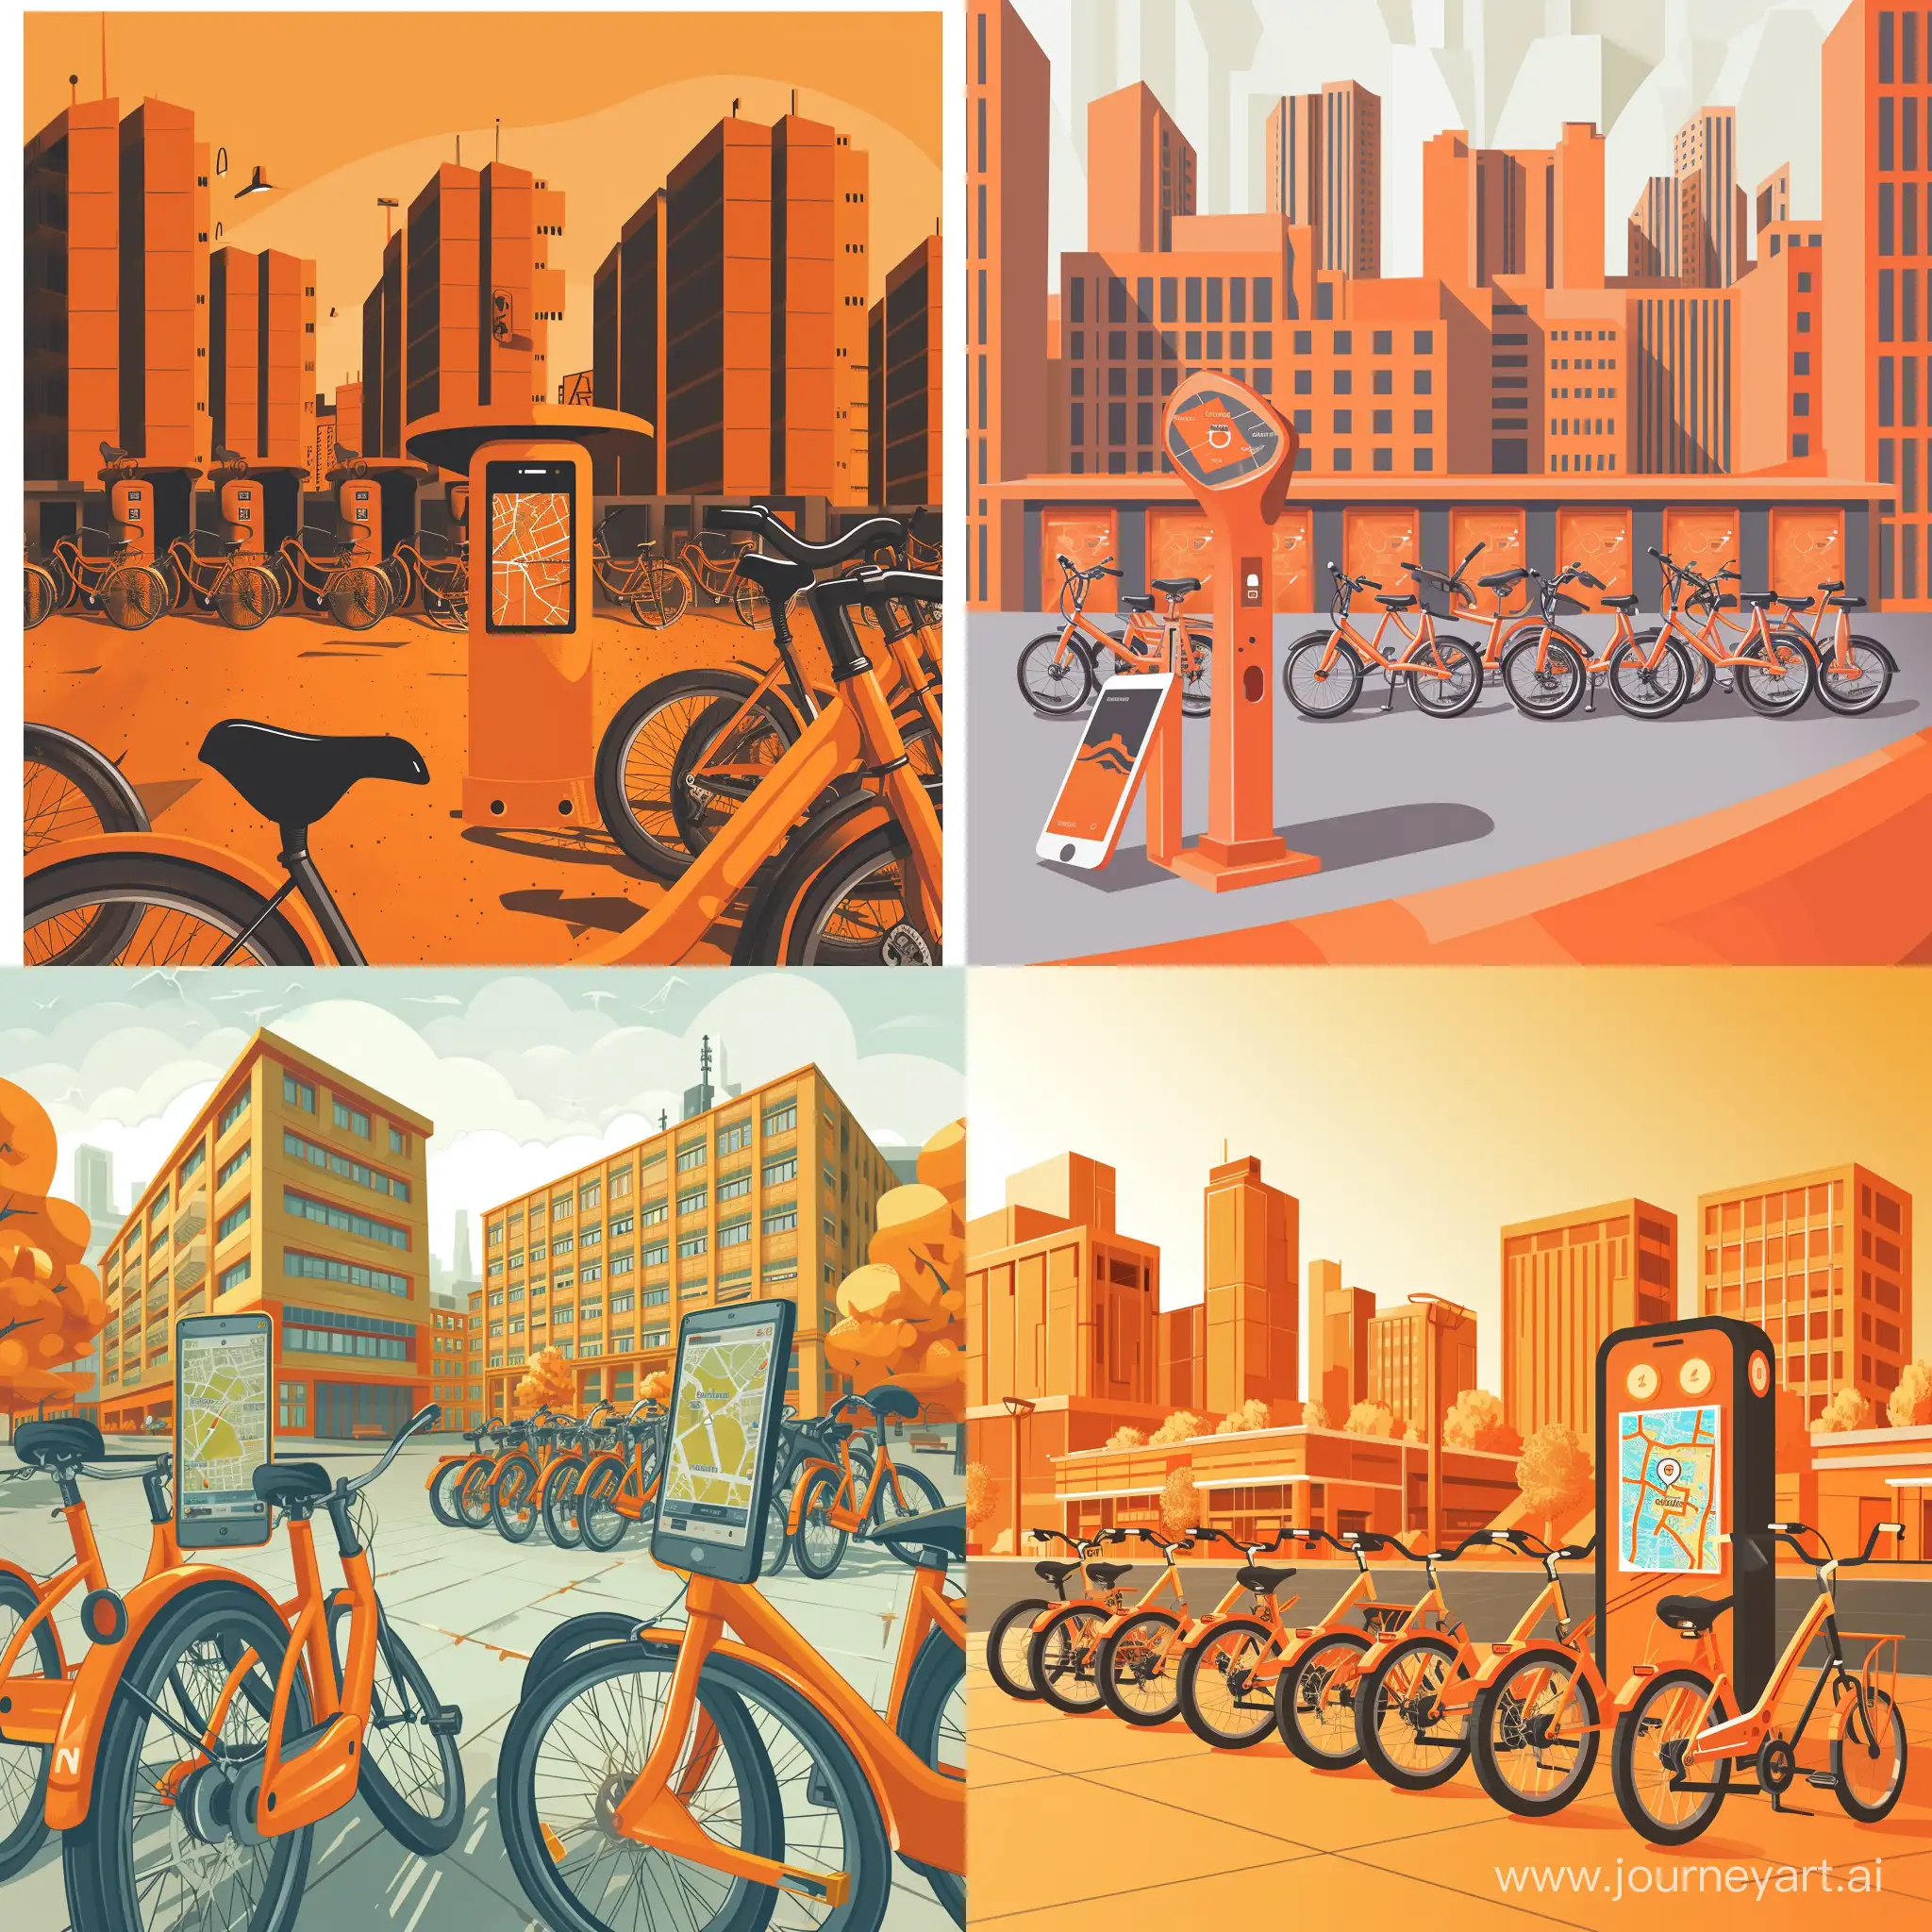 University-Bike-Rental-Station-with-Orange-Bicycles-and-Mobile-Navigation